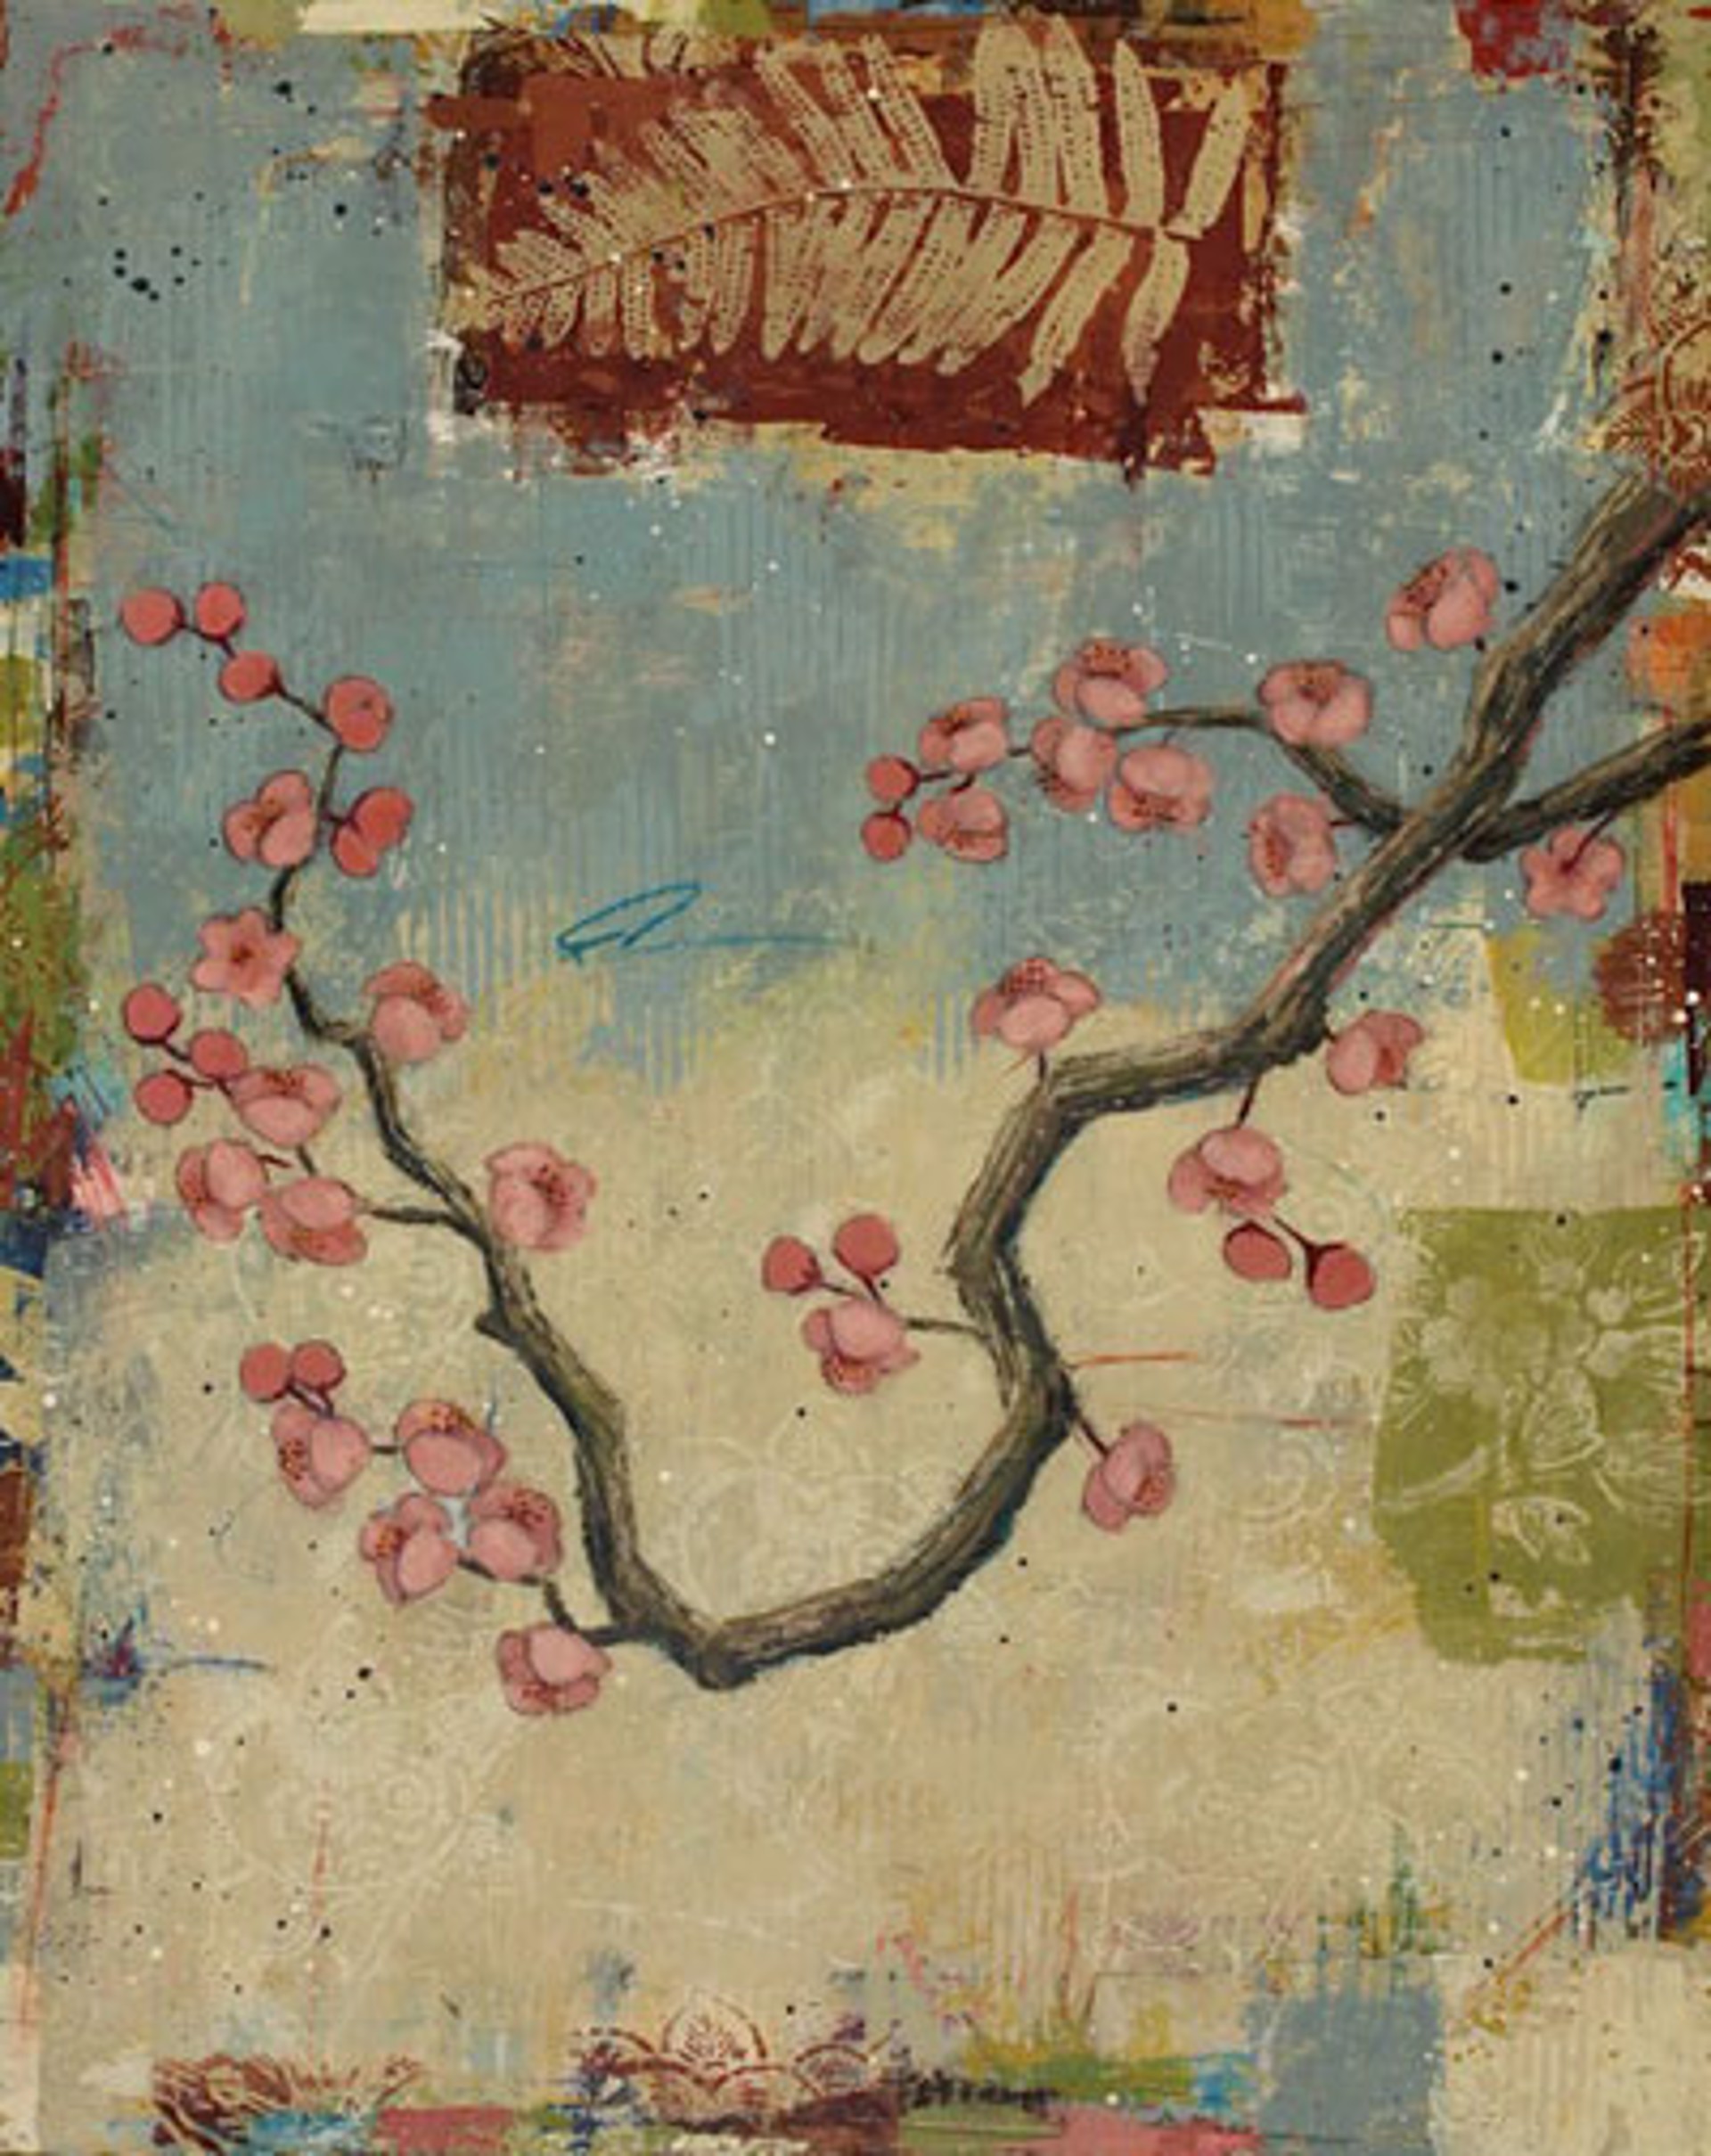 Flowering Cherry #4 by Paul Brigham